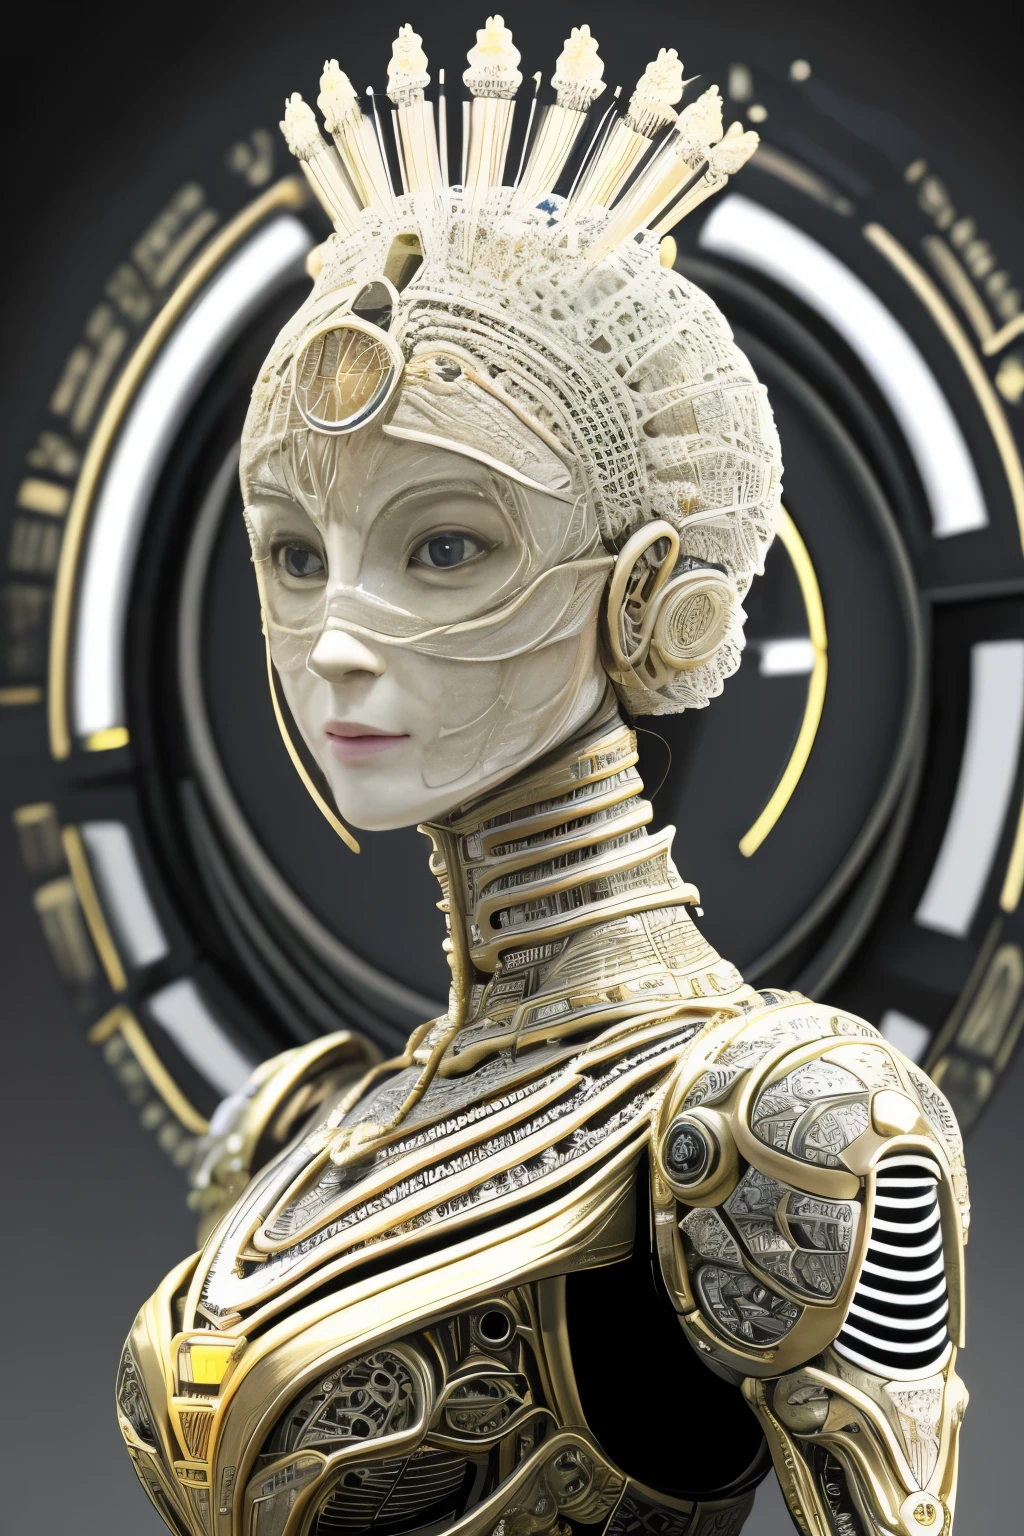 Intricate 3d rendering of highly detailed beautiful ceramic silhouette female 機器人 face, 賽博格, 機器人 parts, 150毫米, 美丽的工作室柔和的灯光, 環形燈, 充滿活力的細節, 奢华赛博朋克, 收入, 超現實主義, 解剖學 , 面部肌肉, 电缆线, 微晶片, 优雅, 美麗的背景, 辛烷渲染, HR吉格爾風格, 8K, 更好的品質, 藝術品, 插圖, 非常精致美丽, 非常详细, CG, 制服, 壁紙, ( 忠誠, 忠誠: 1.37), 燦爛, 精細的細節, 藝術品, 更好的品質, 官方艺术, Papel de parede CG Unity 8K 非常详细, 荒诞, Inacreditavelmente 荒诞o, 機器人, 銀色頭盔, 全身, 坐下来写